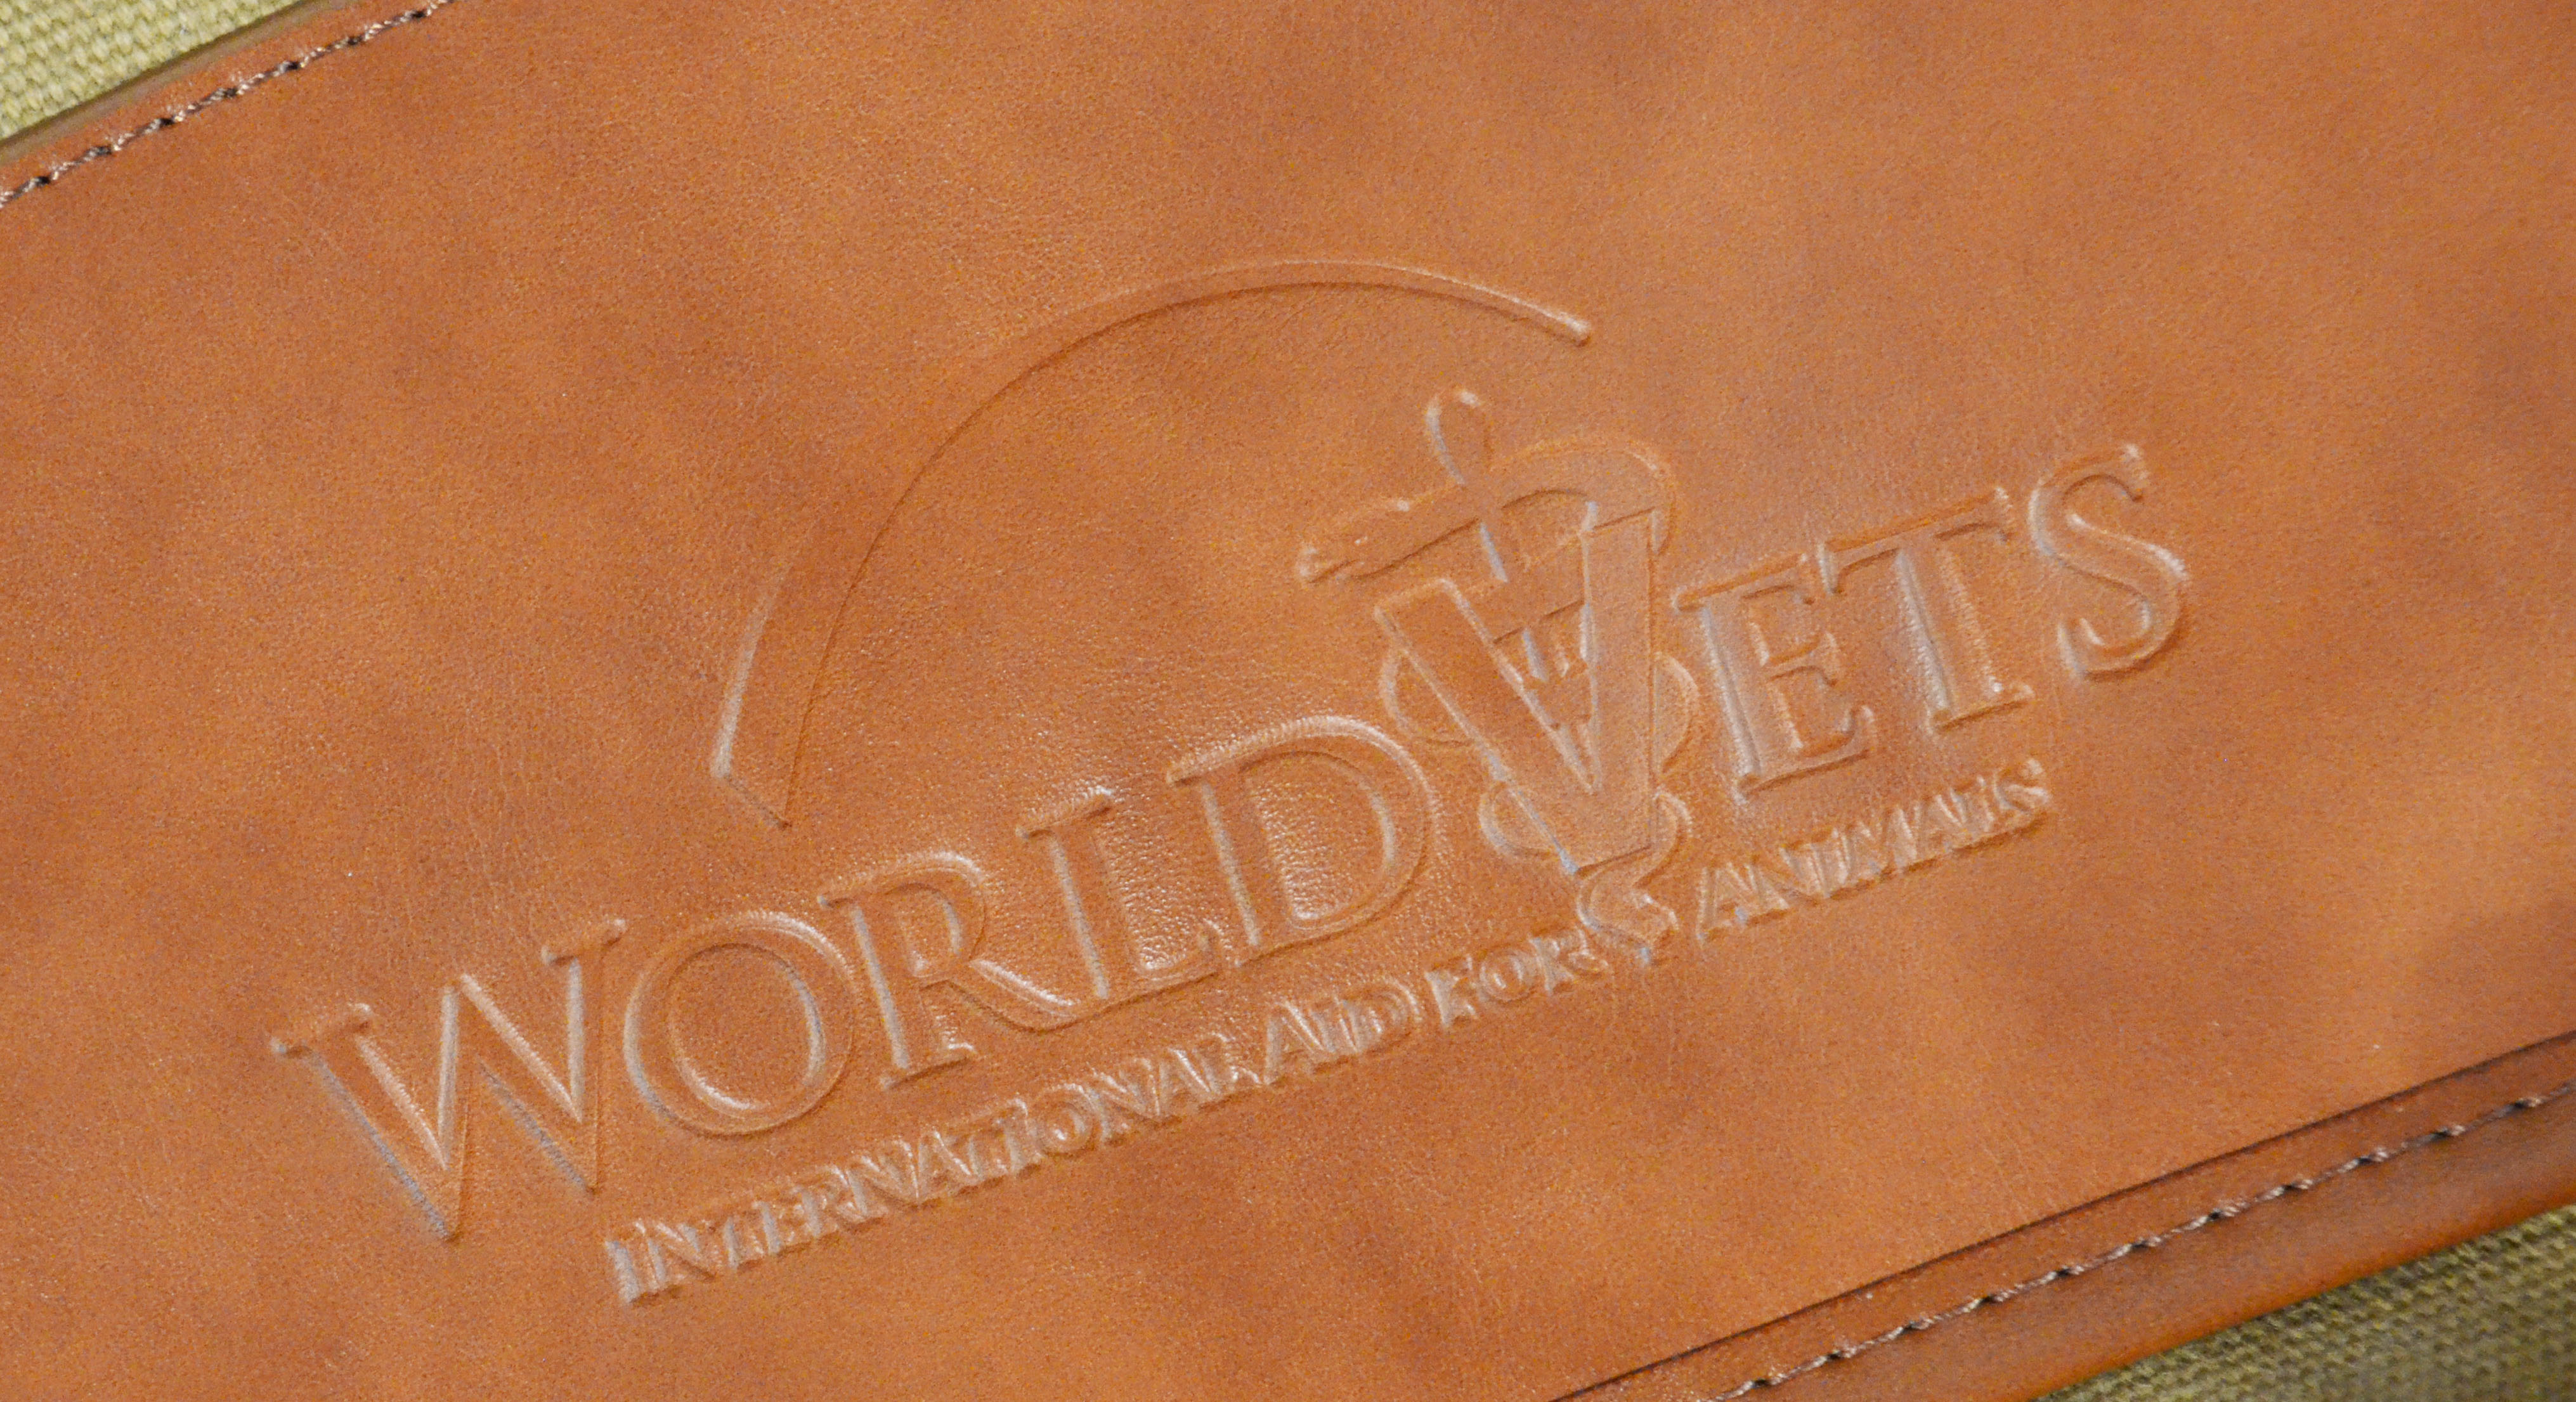 World Vets imprinted logo